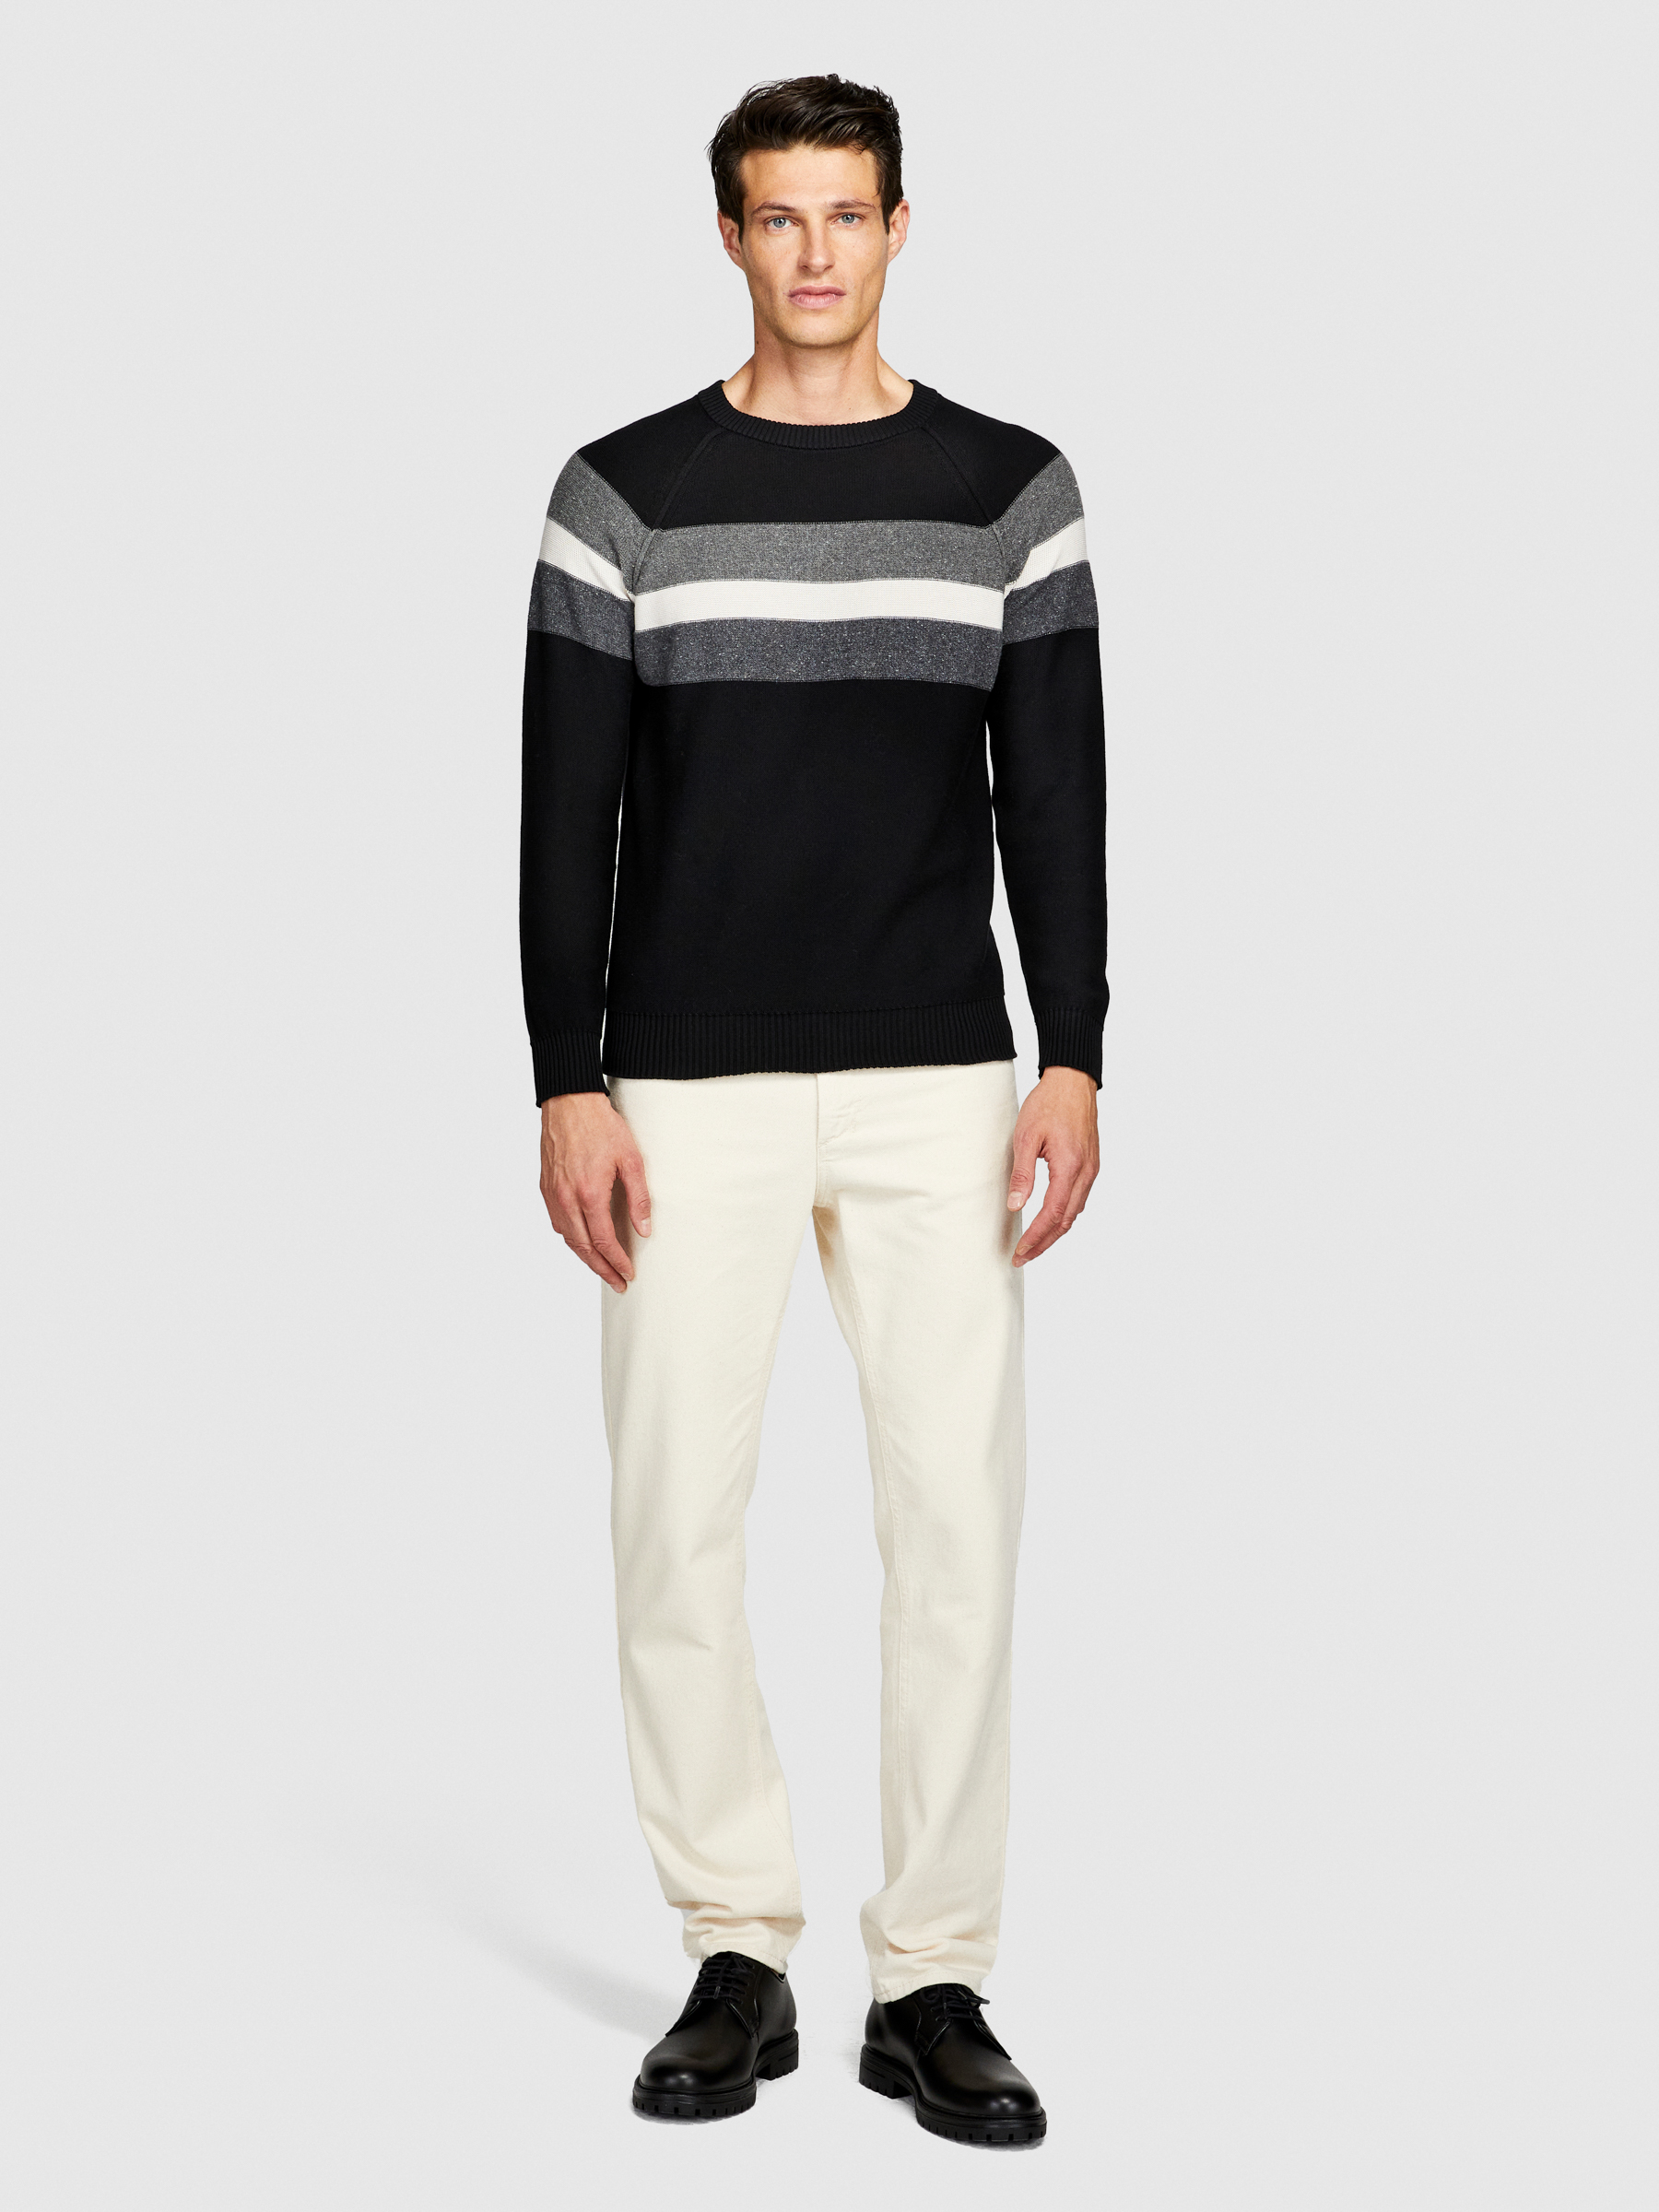 Sisley - Sweater With Stripes, Man, Black, Size: L